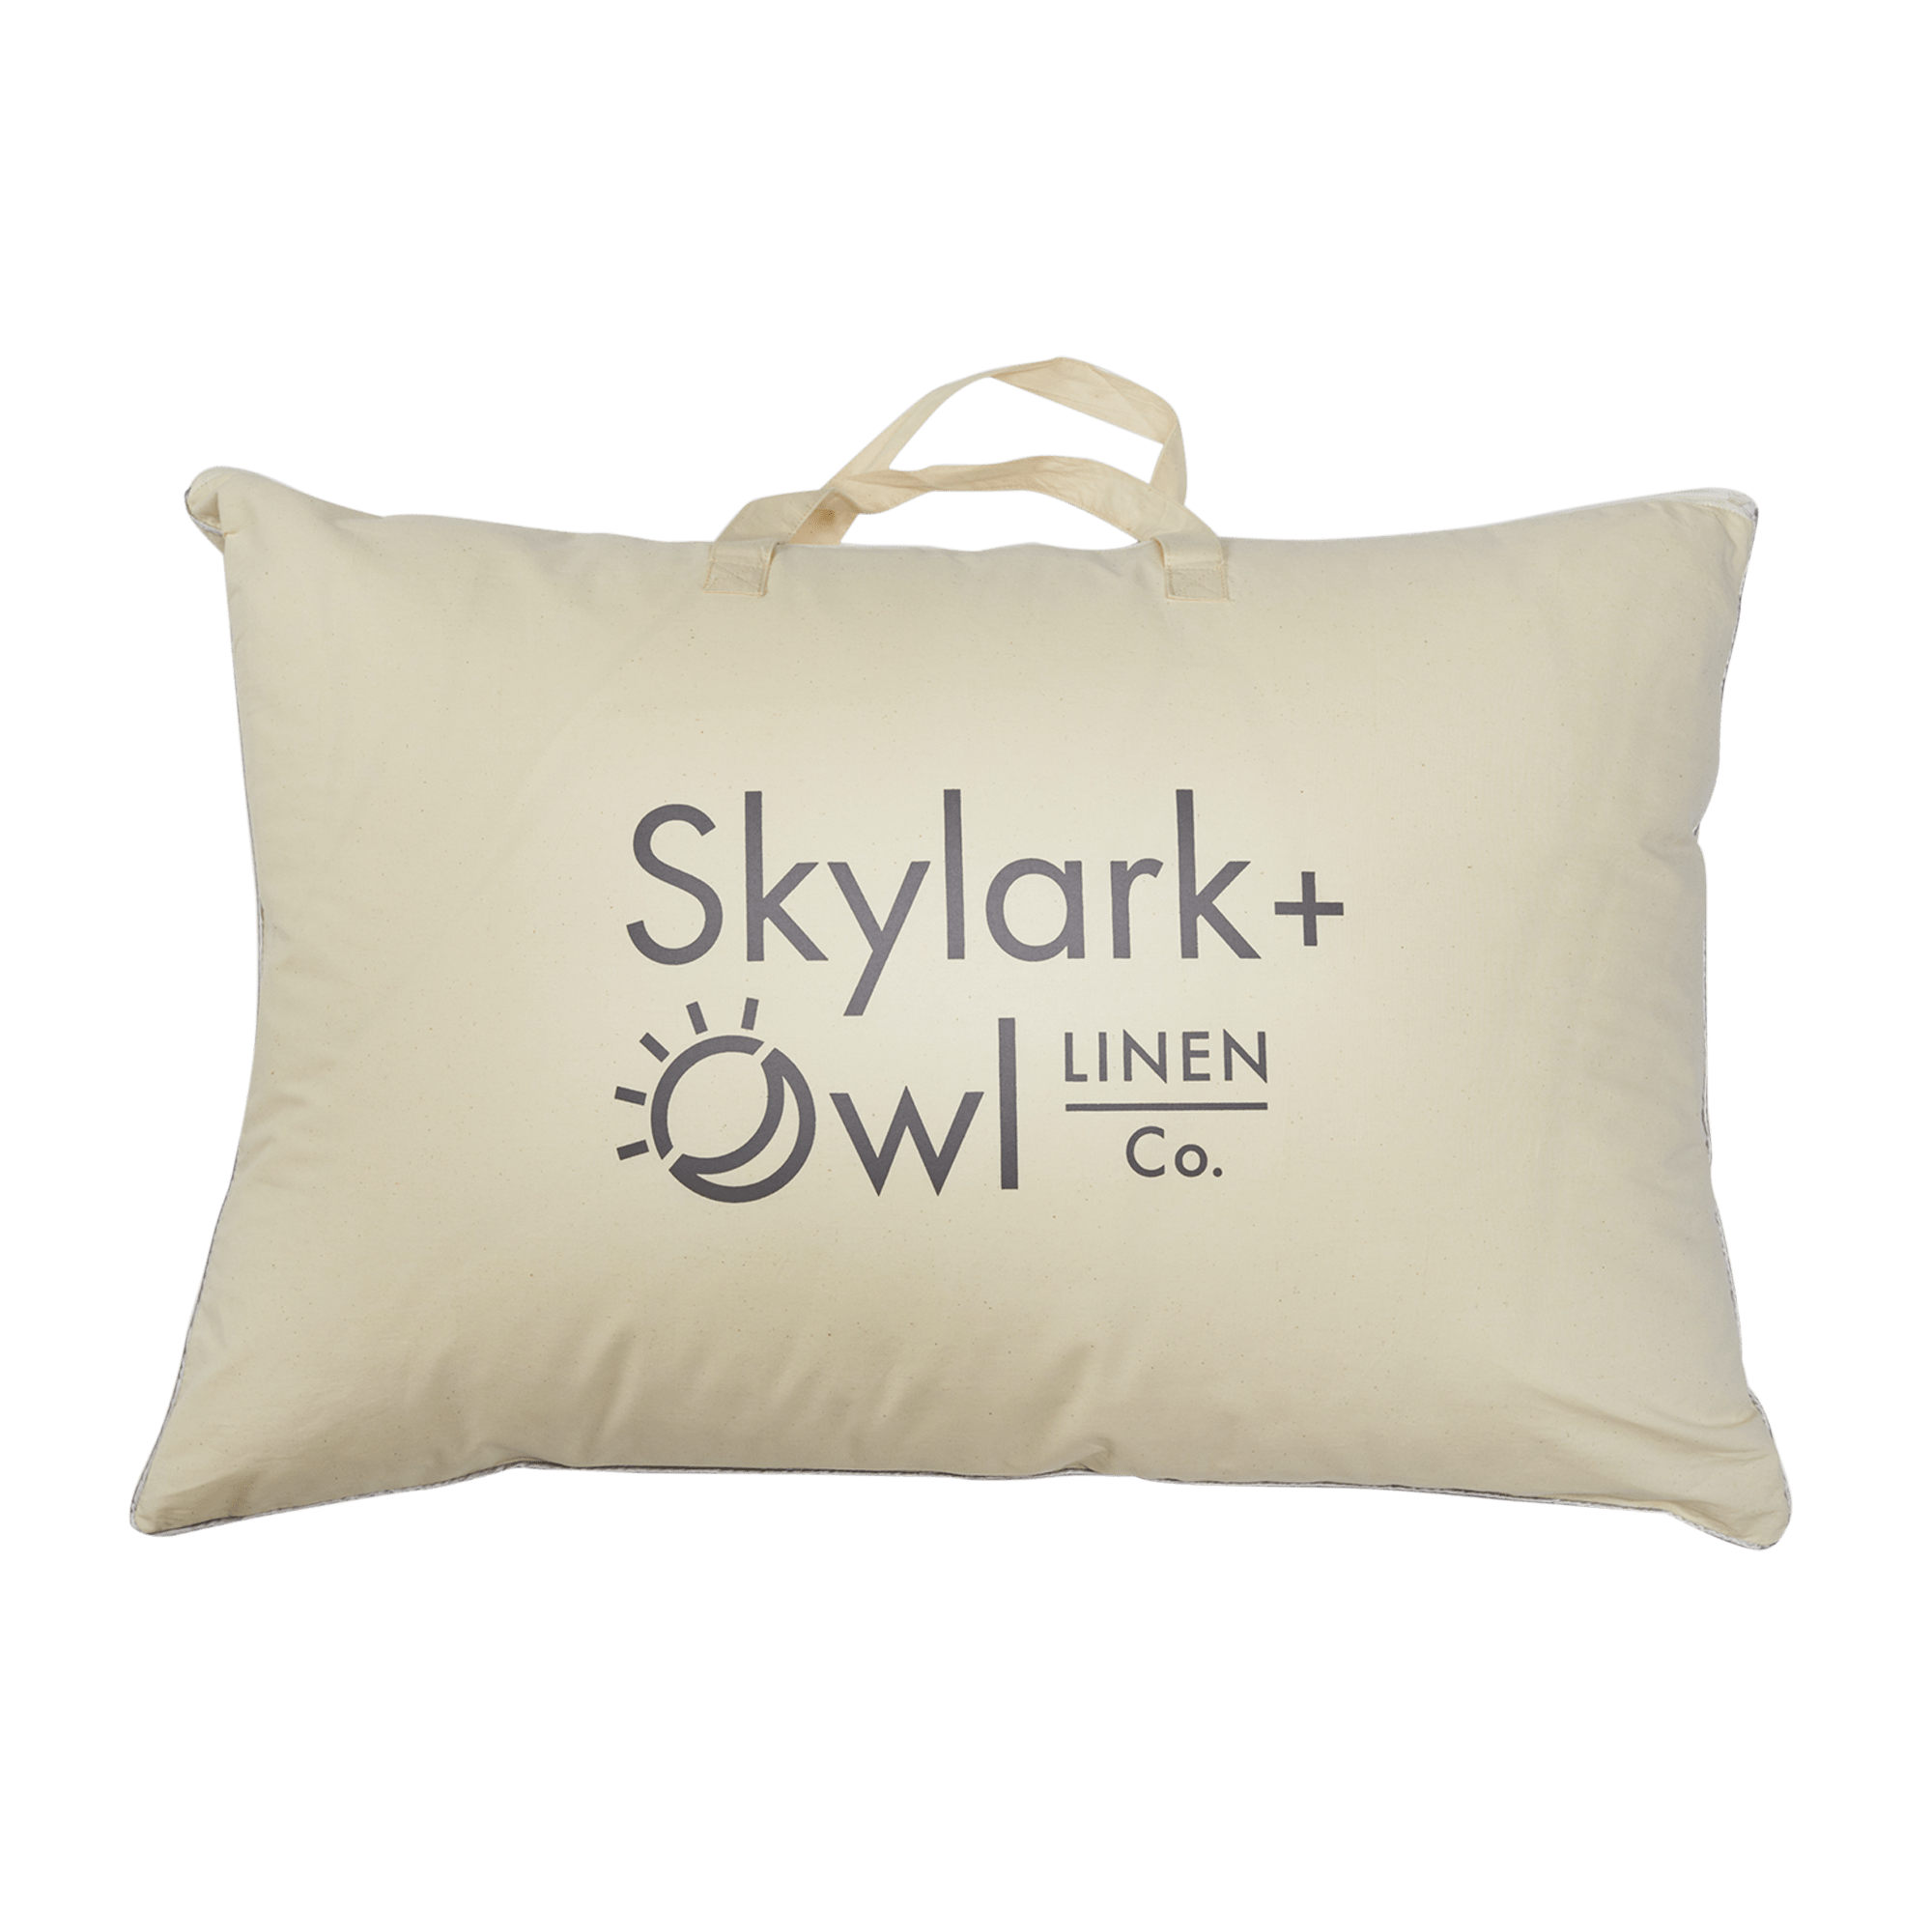 Essential Pillow in Skylark + Owl casing